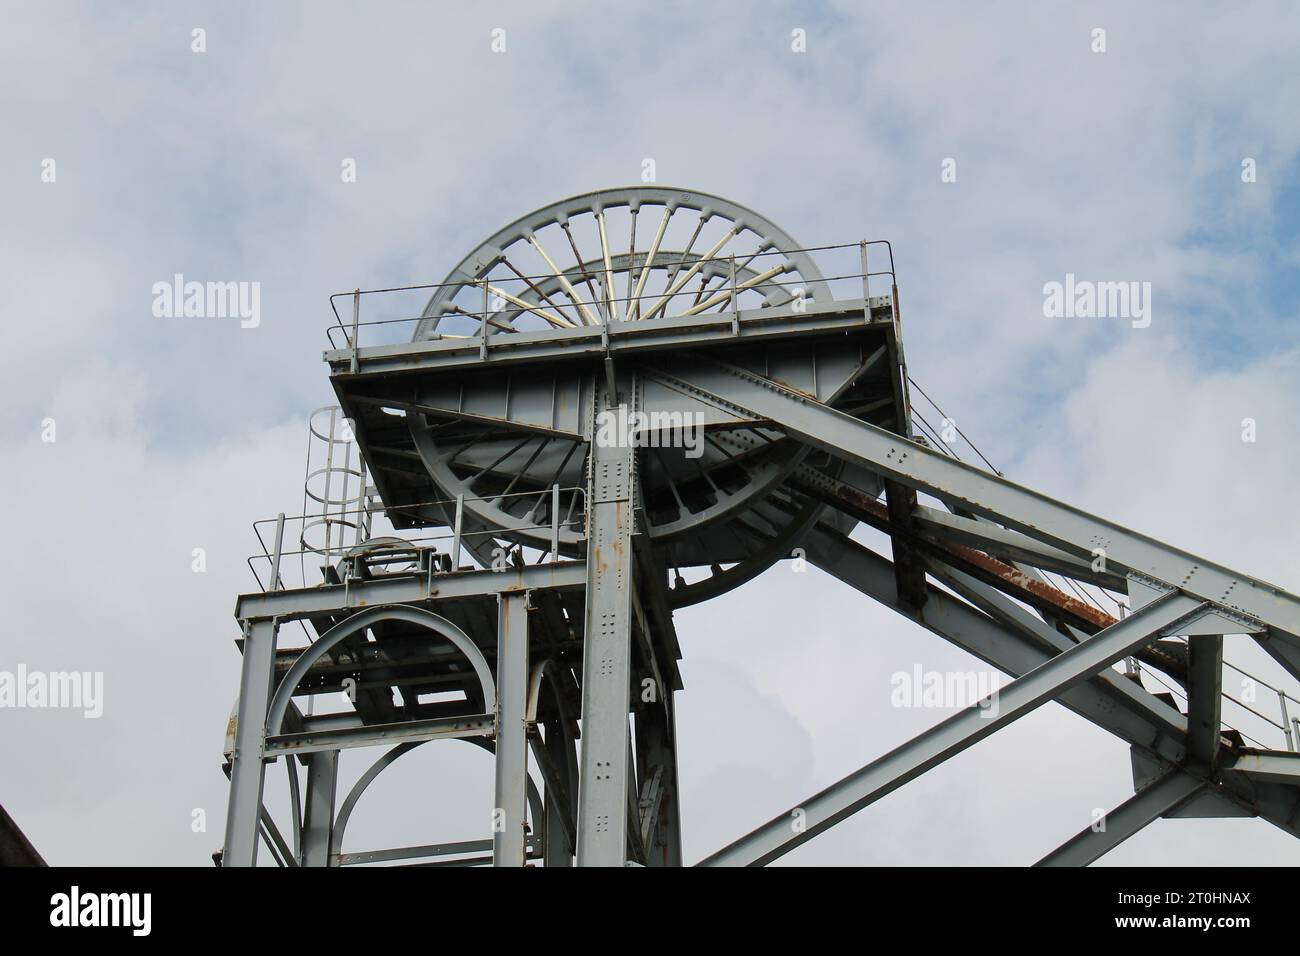 The Winding Wheels of a Historic Coal Mining Headstocks. Stock Photo